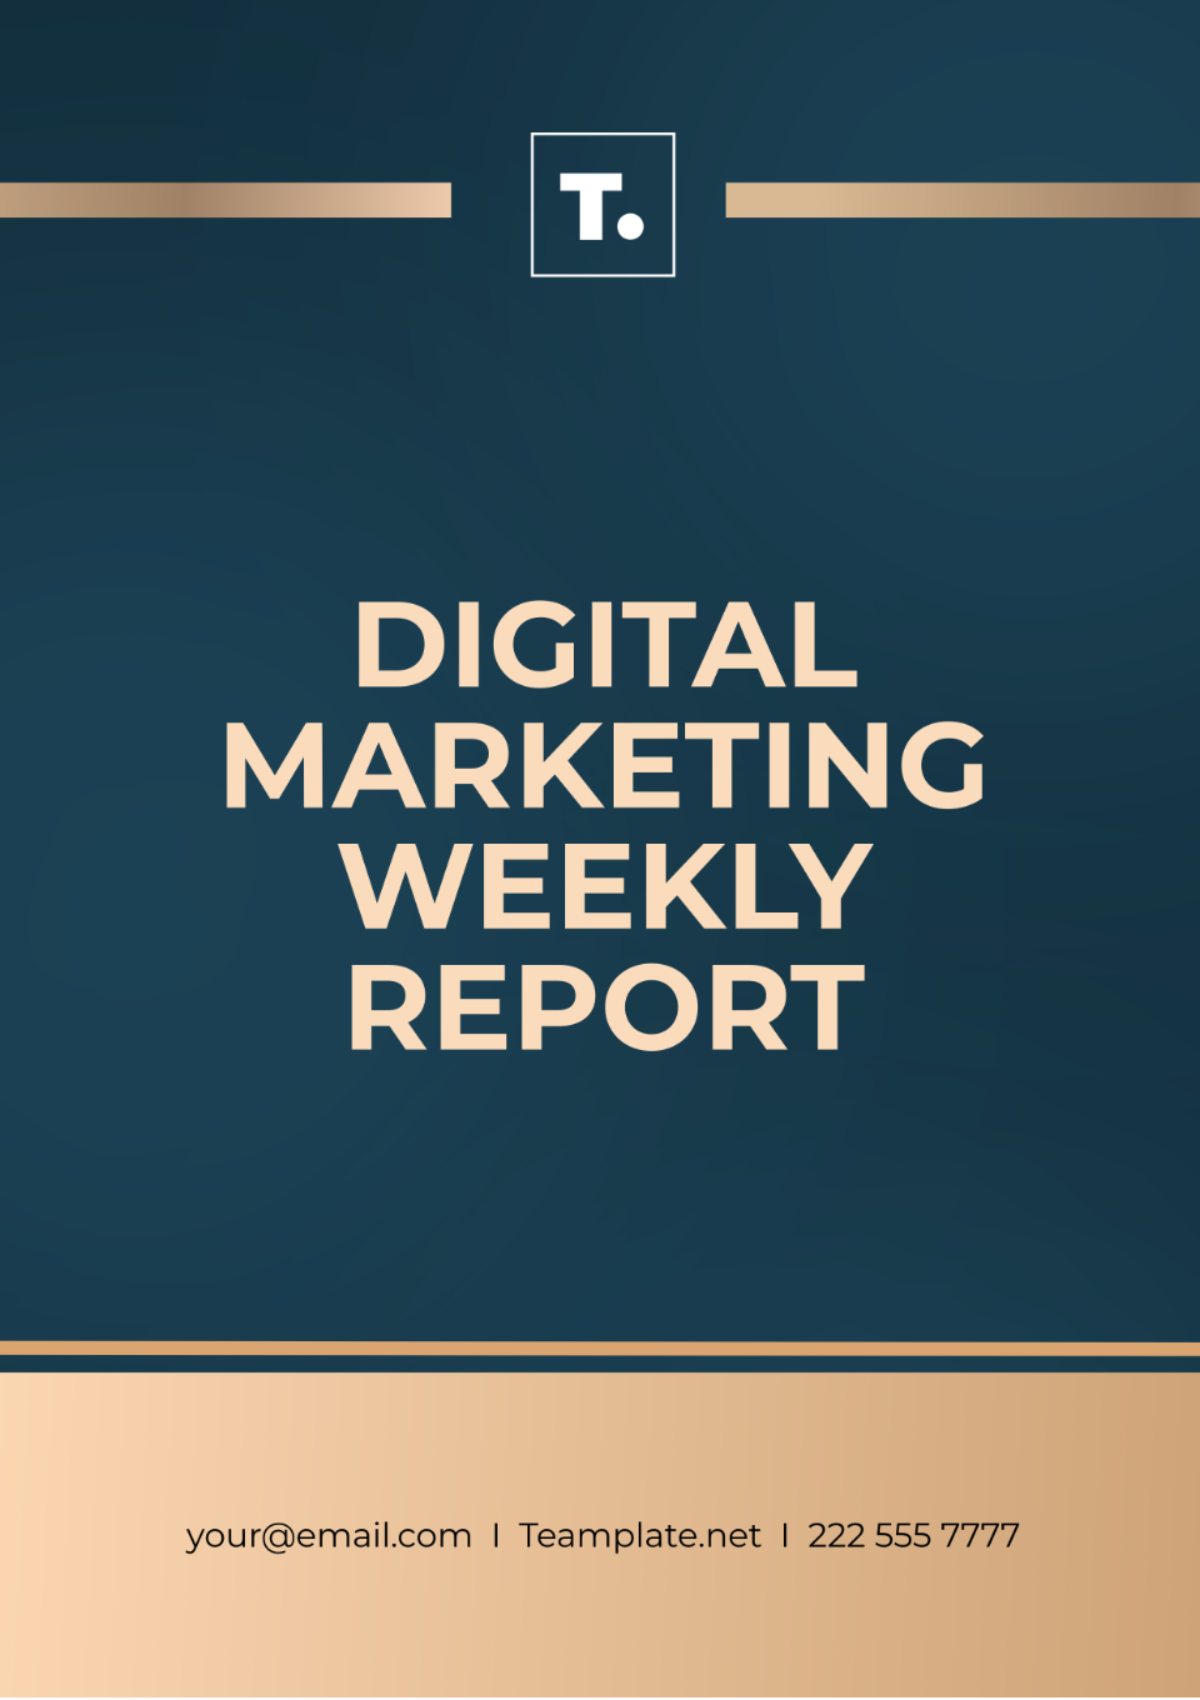 Digital Marketing Weekly Report Template